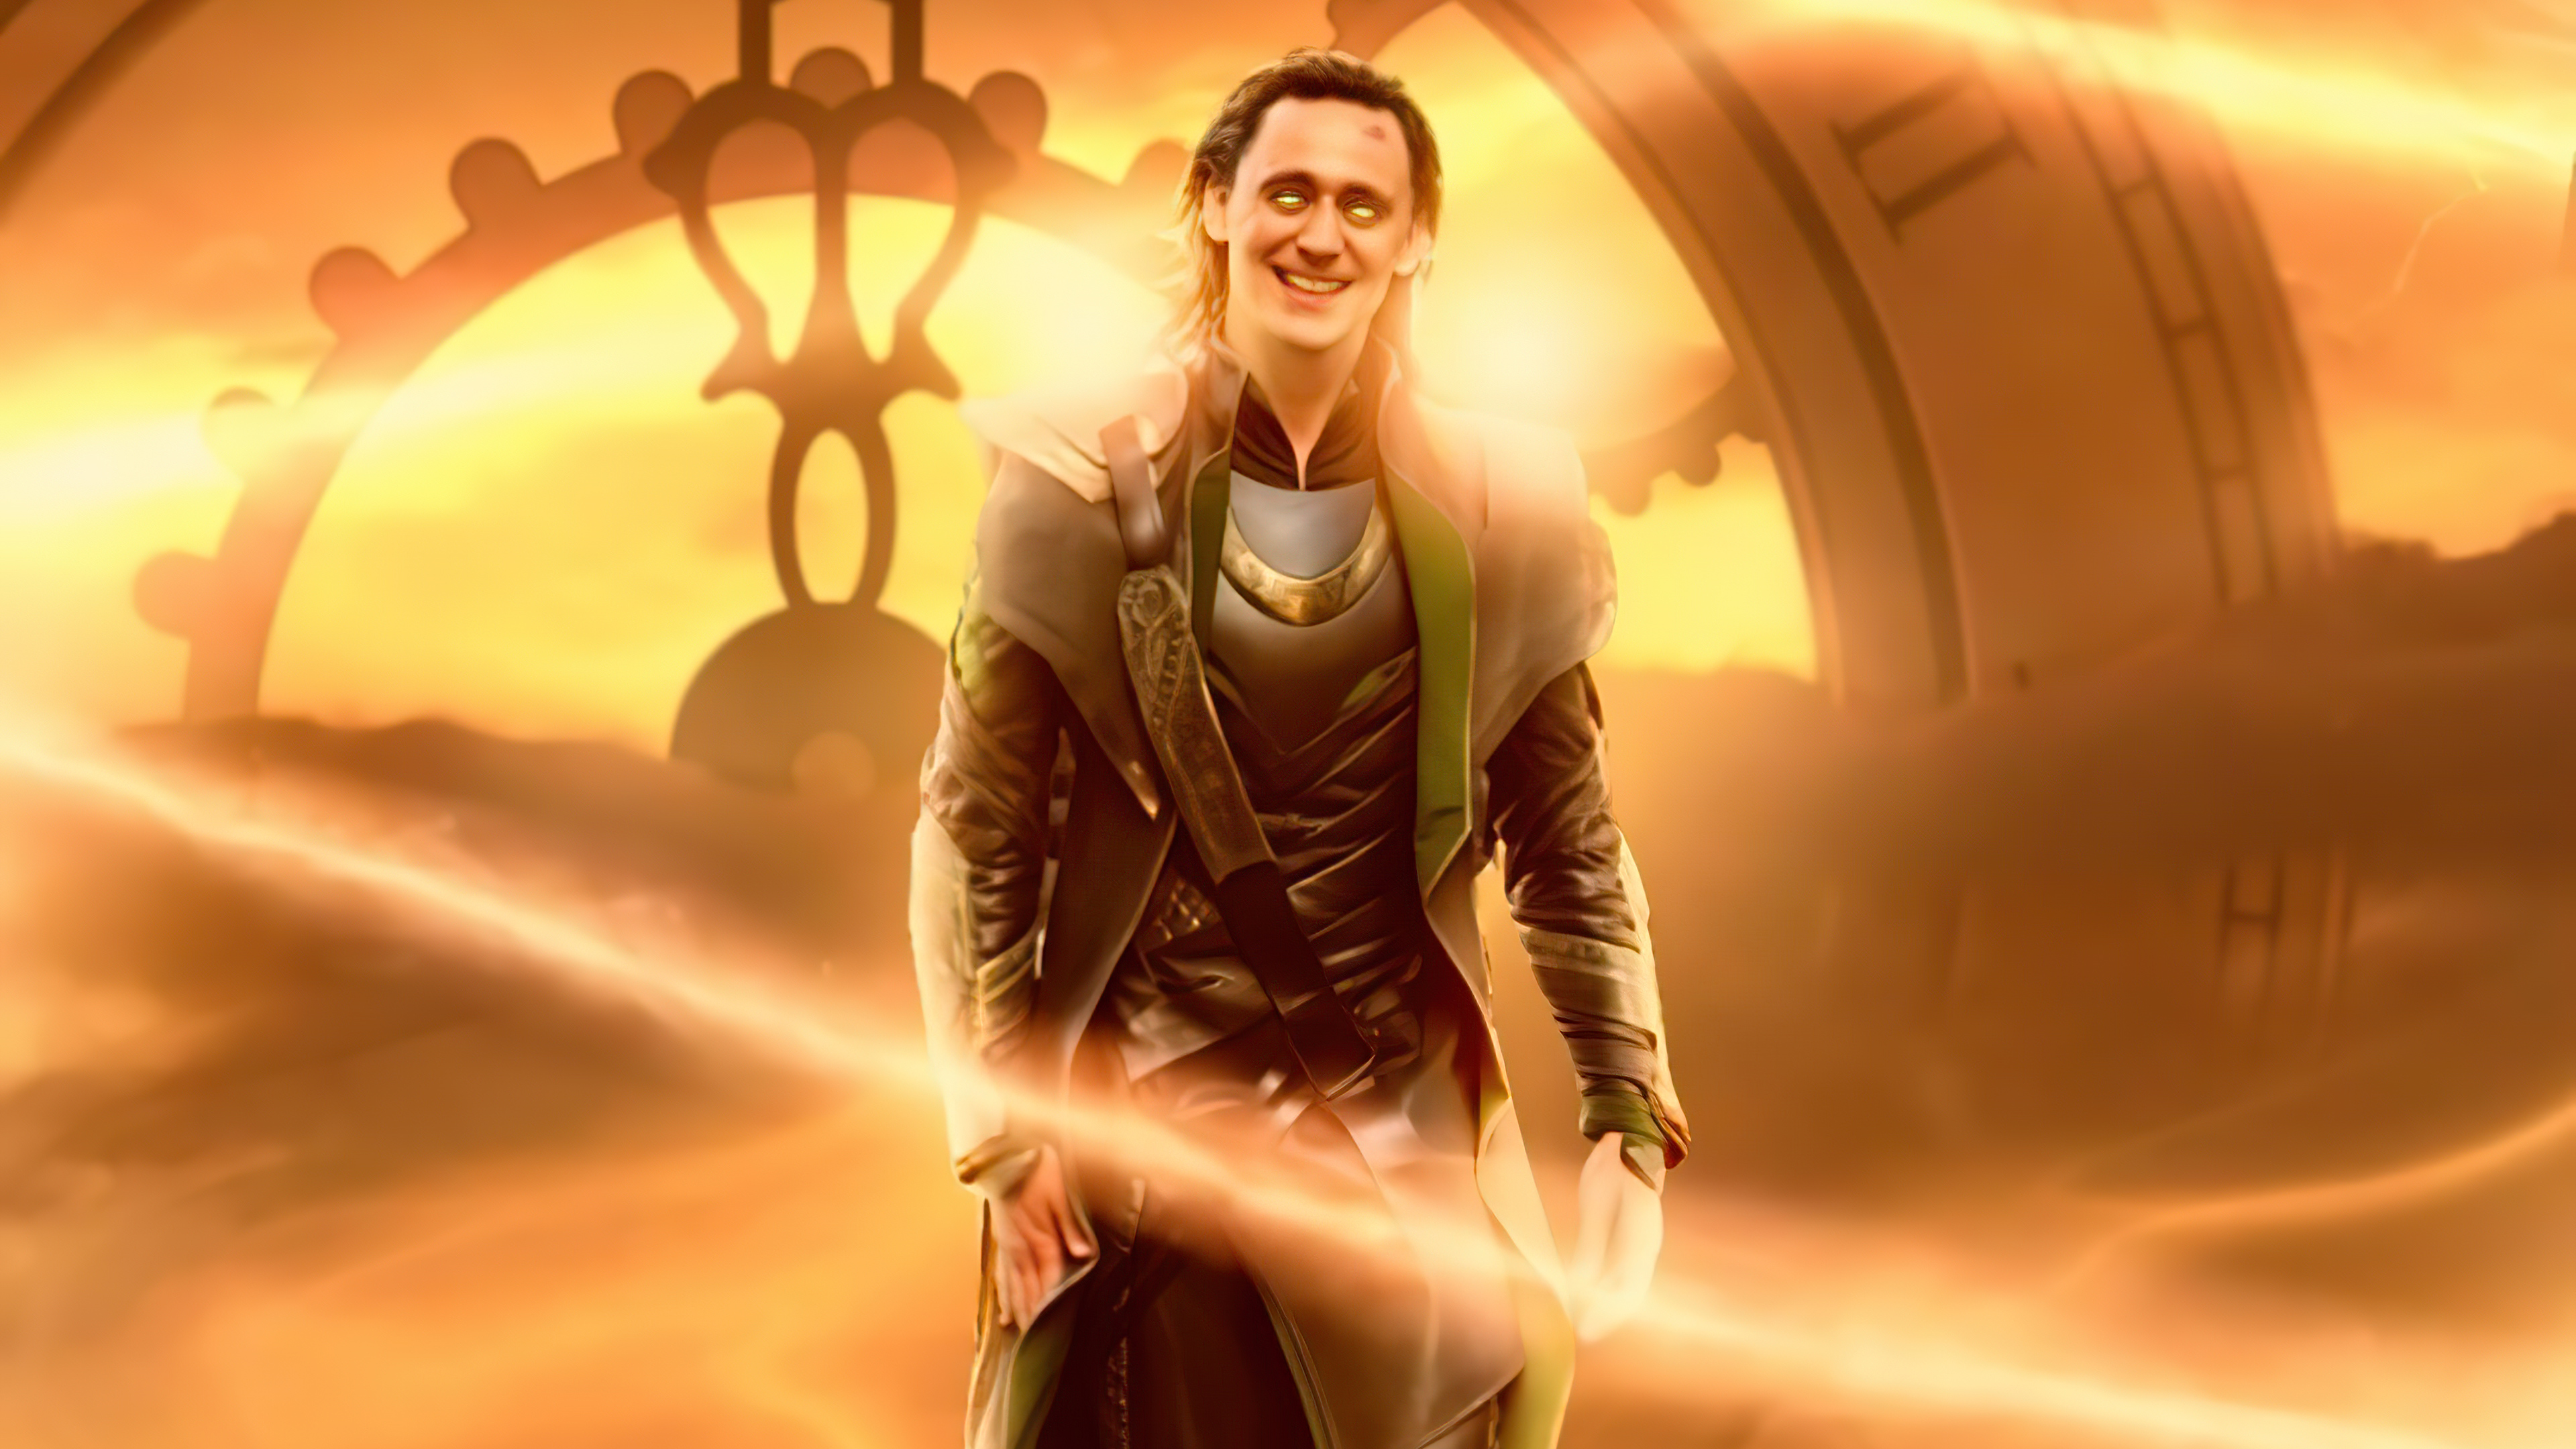 Loki The God of mischief Poster Wallpaper 4k Ultra HD ID:7617